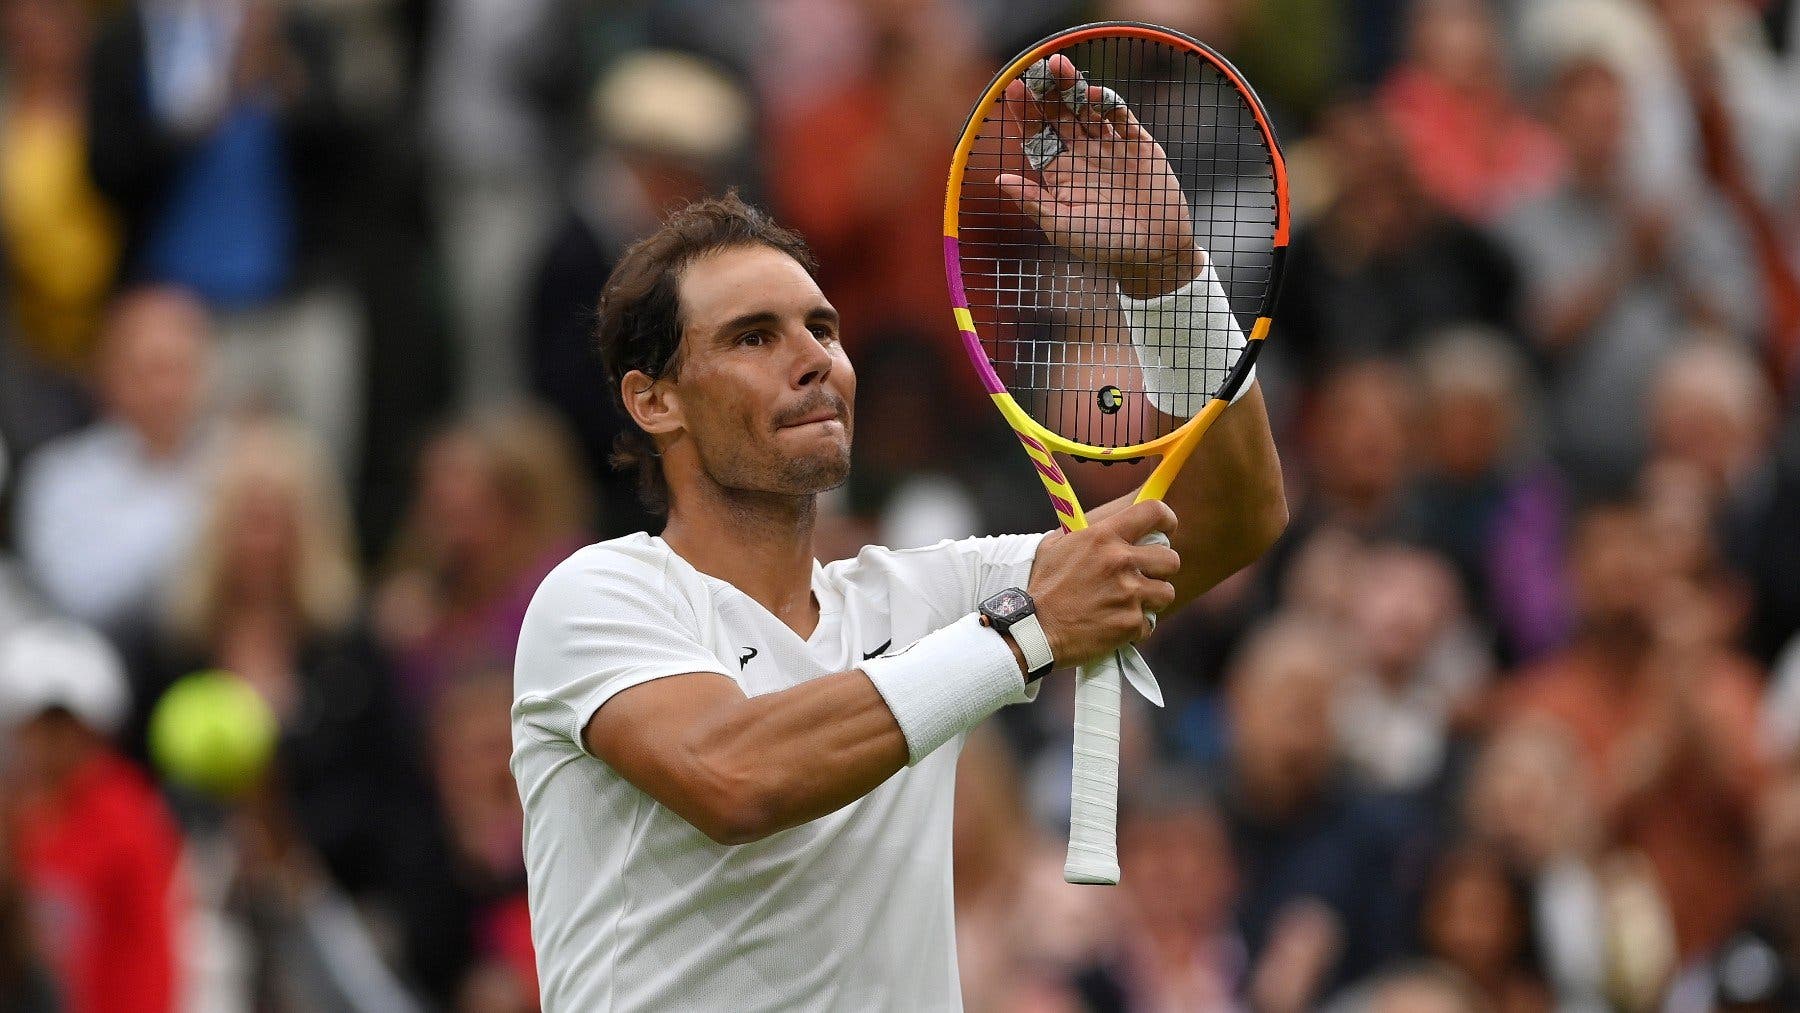 Rafa Nadal's hidden injury enlarges the Wimbledon 2022 challenge
